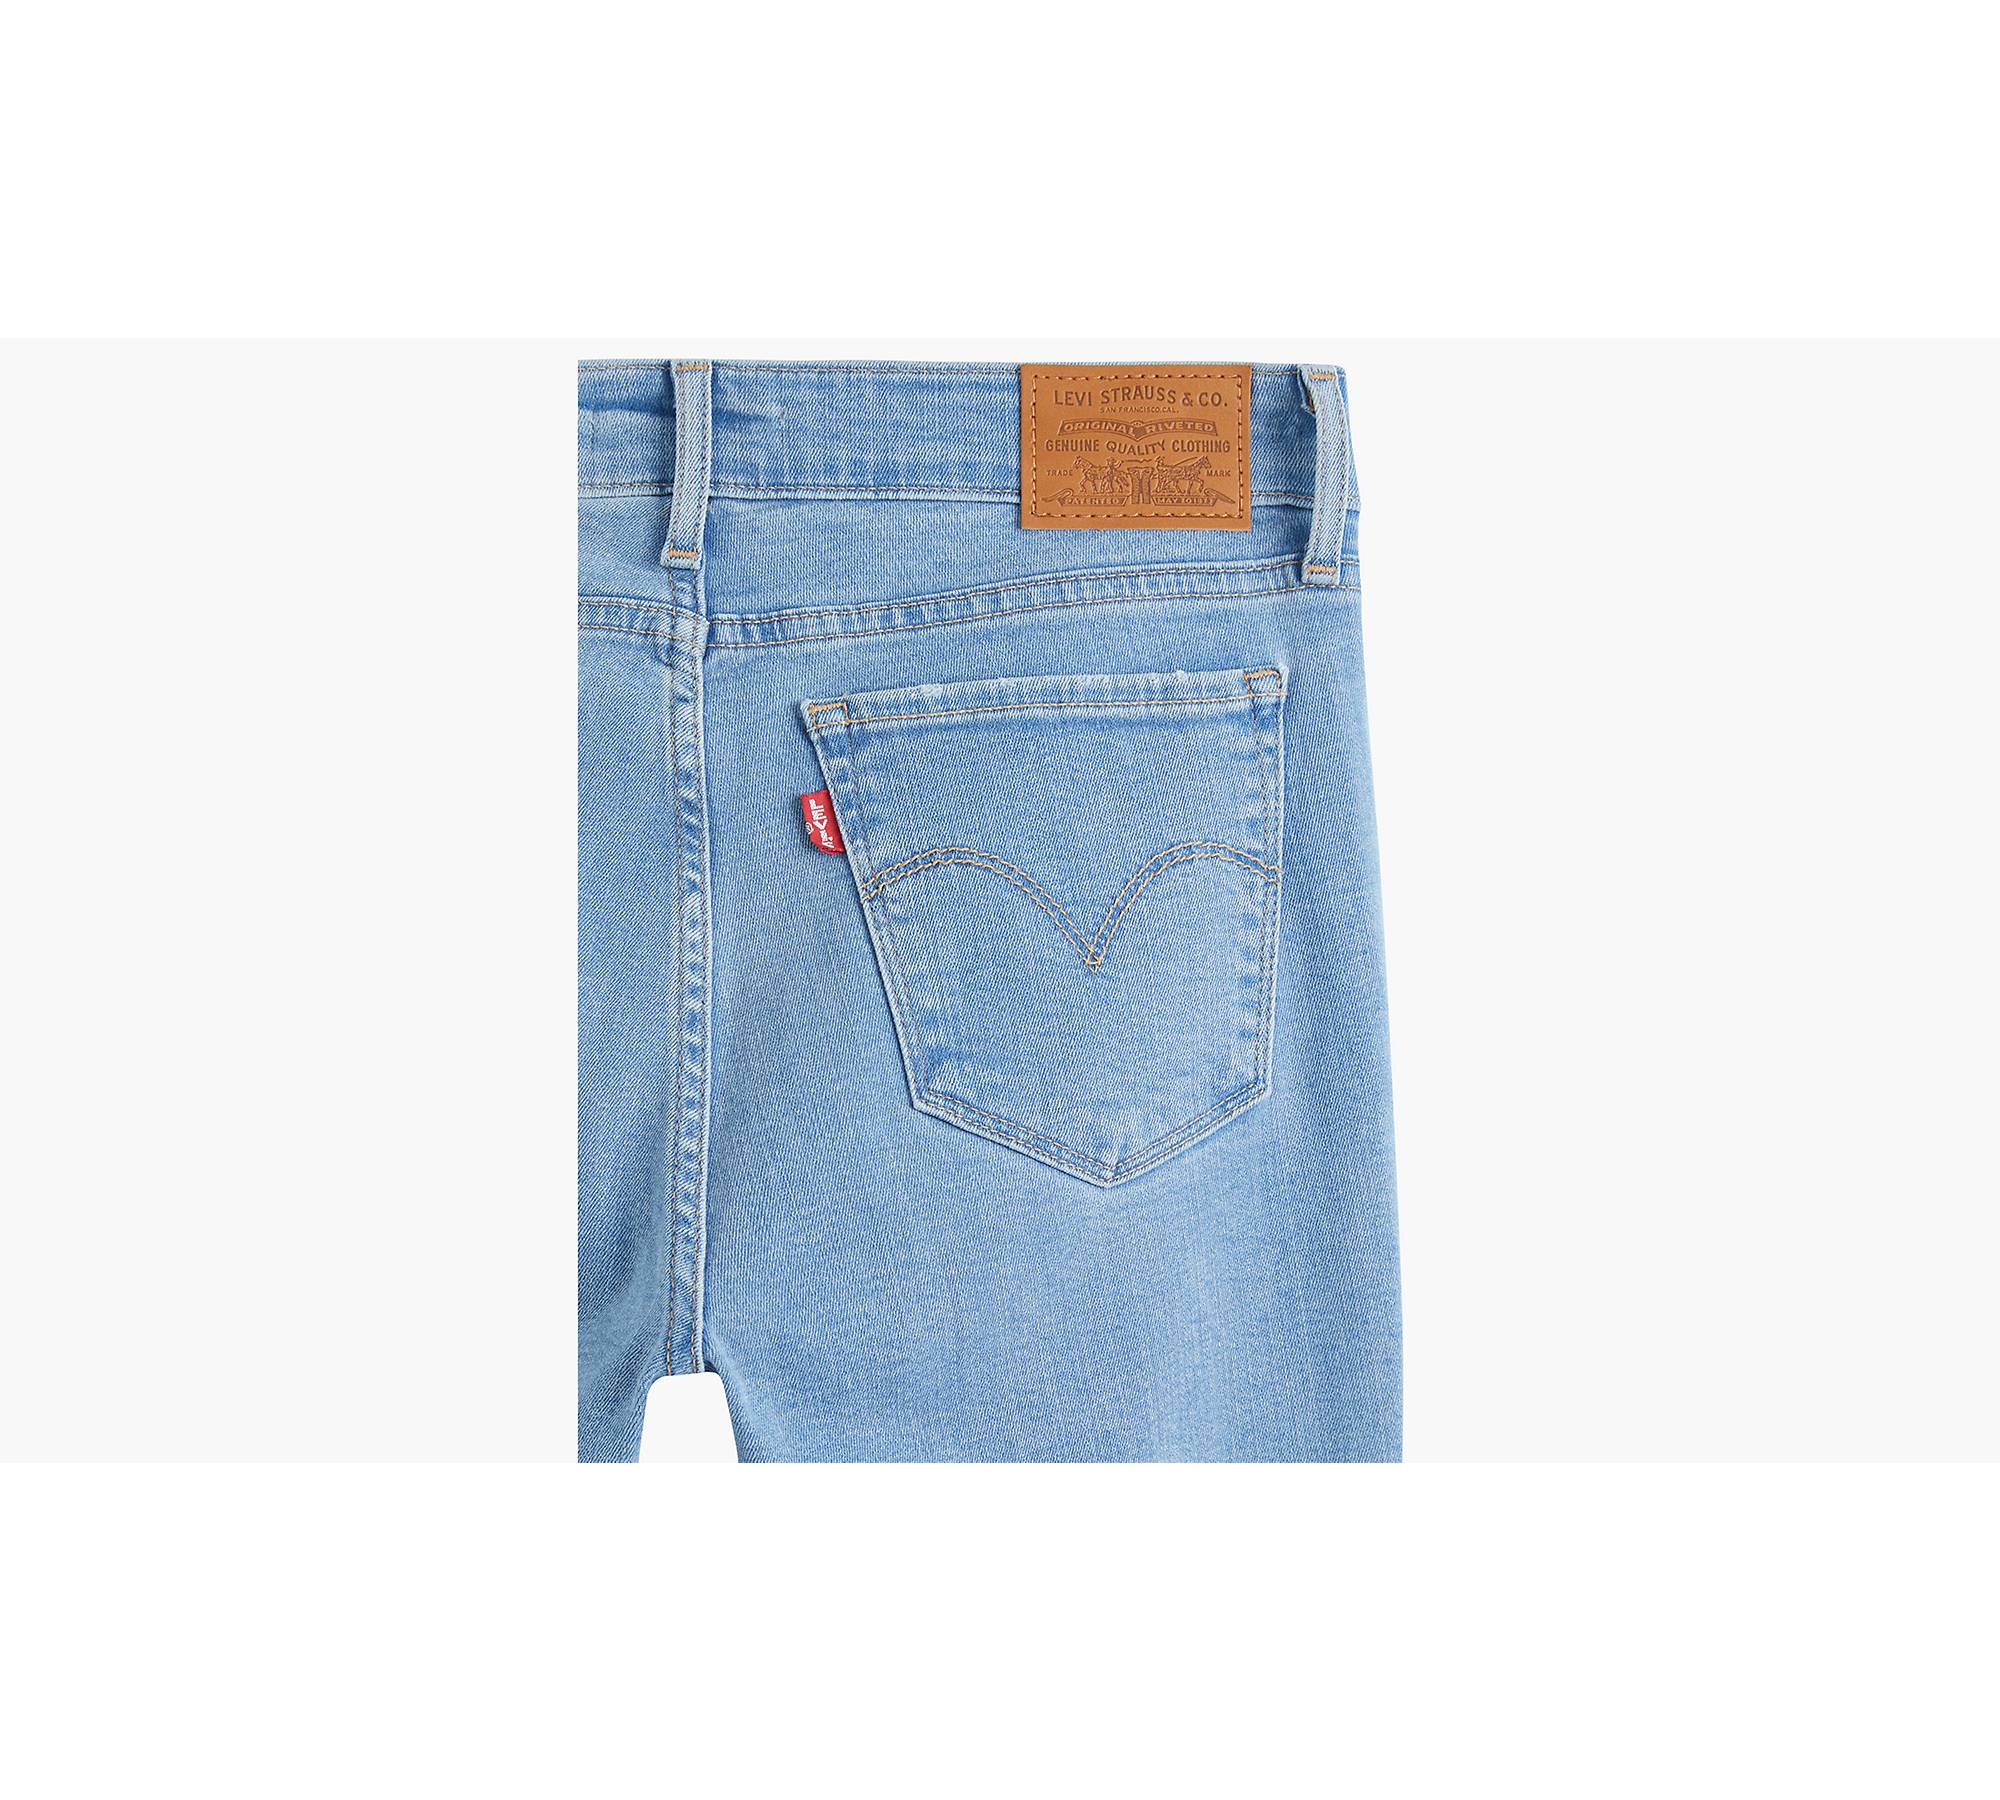 Pantalón Levis 711 Skinny Jeans para mujer